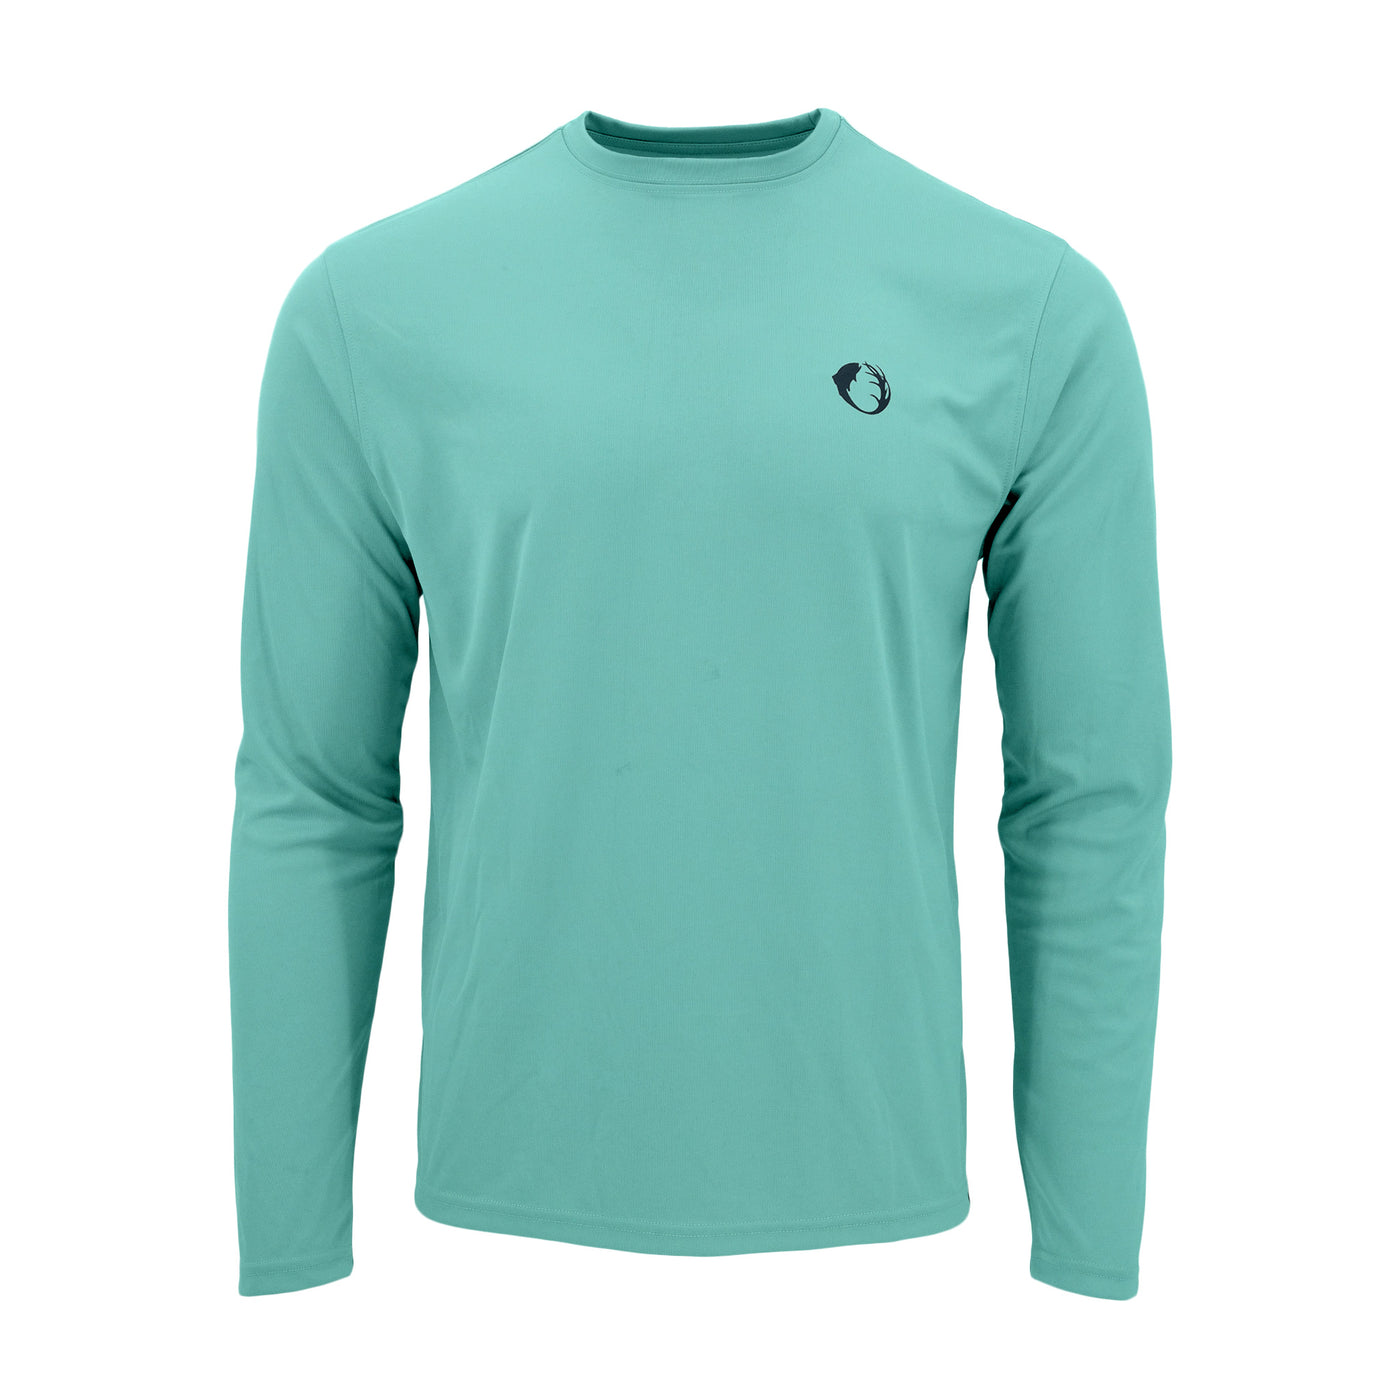 Long sleeve UPF protection 50 sun tee shirt #color_sunset-marlin-cascade